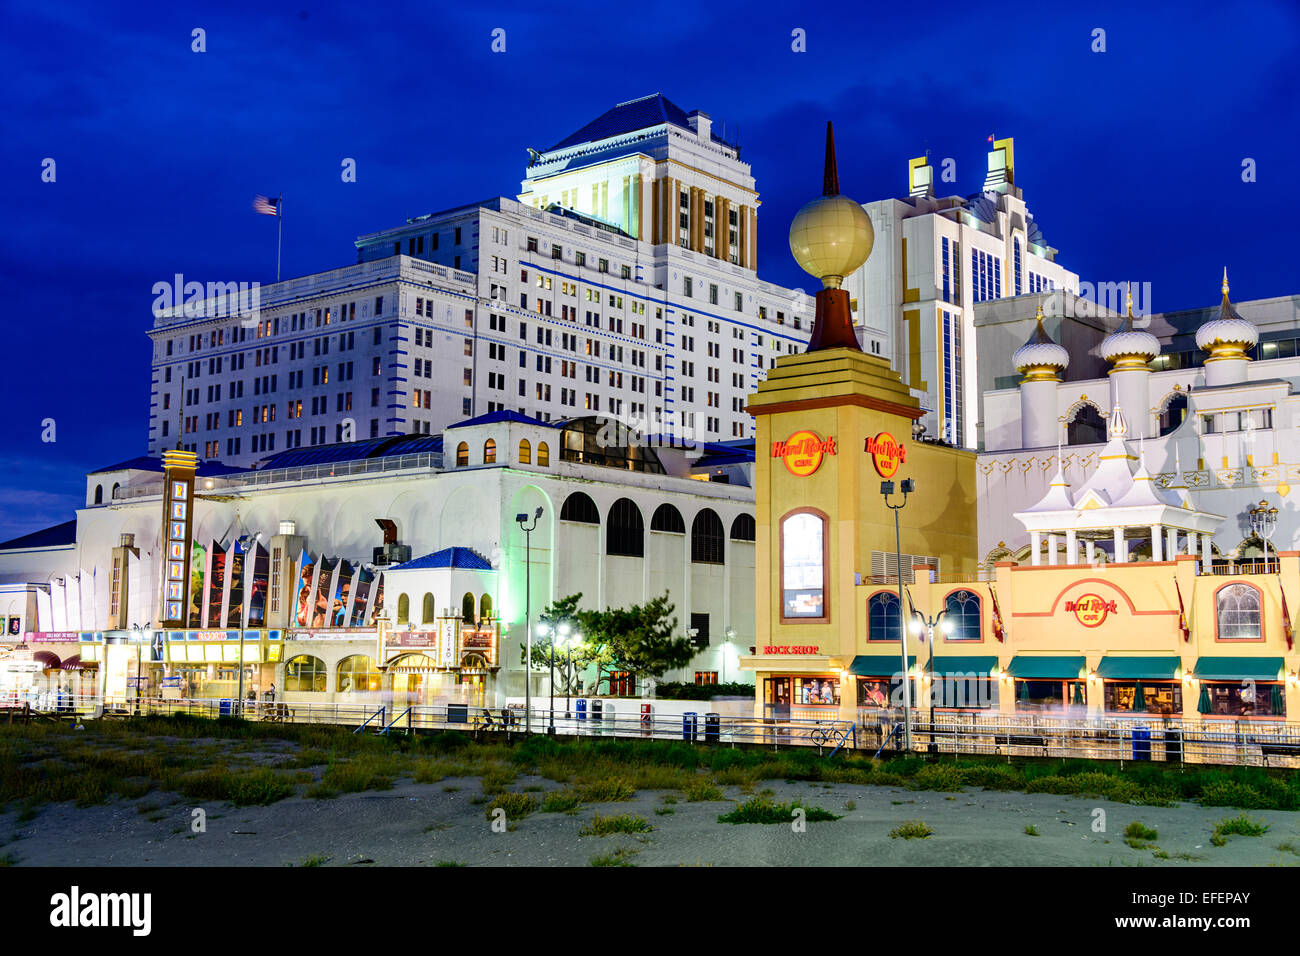 ATLANTIC CITY, NEW JERSEY - SEPTEMBER 8, 2012: Casinos line the Atlantic City boardwalk at dusk. Stock Photo